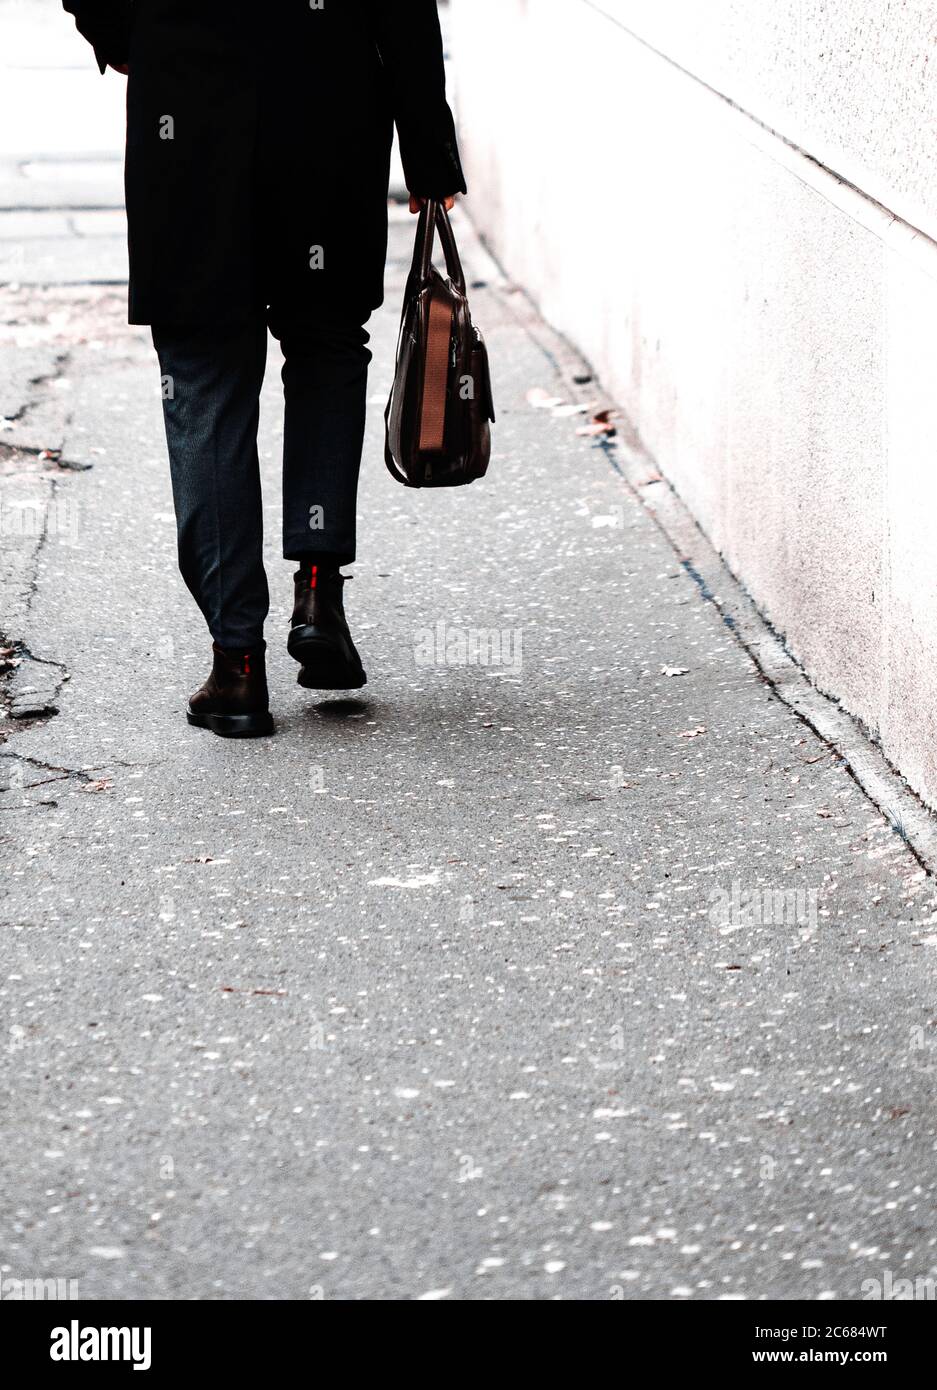 Man walking on sidewalk carrying a bag Stock Photo